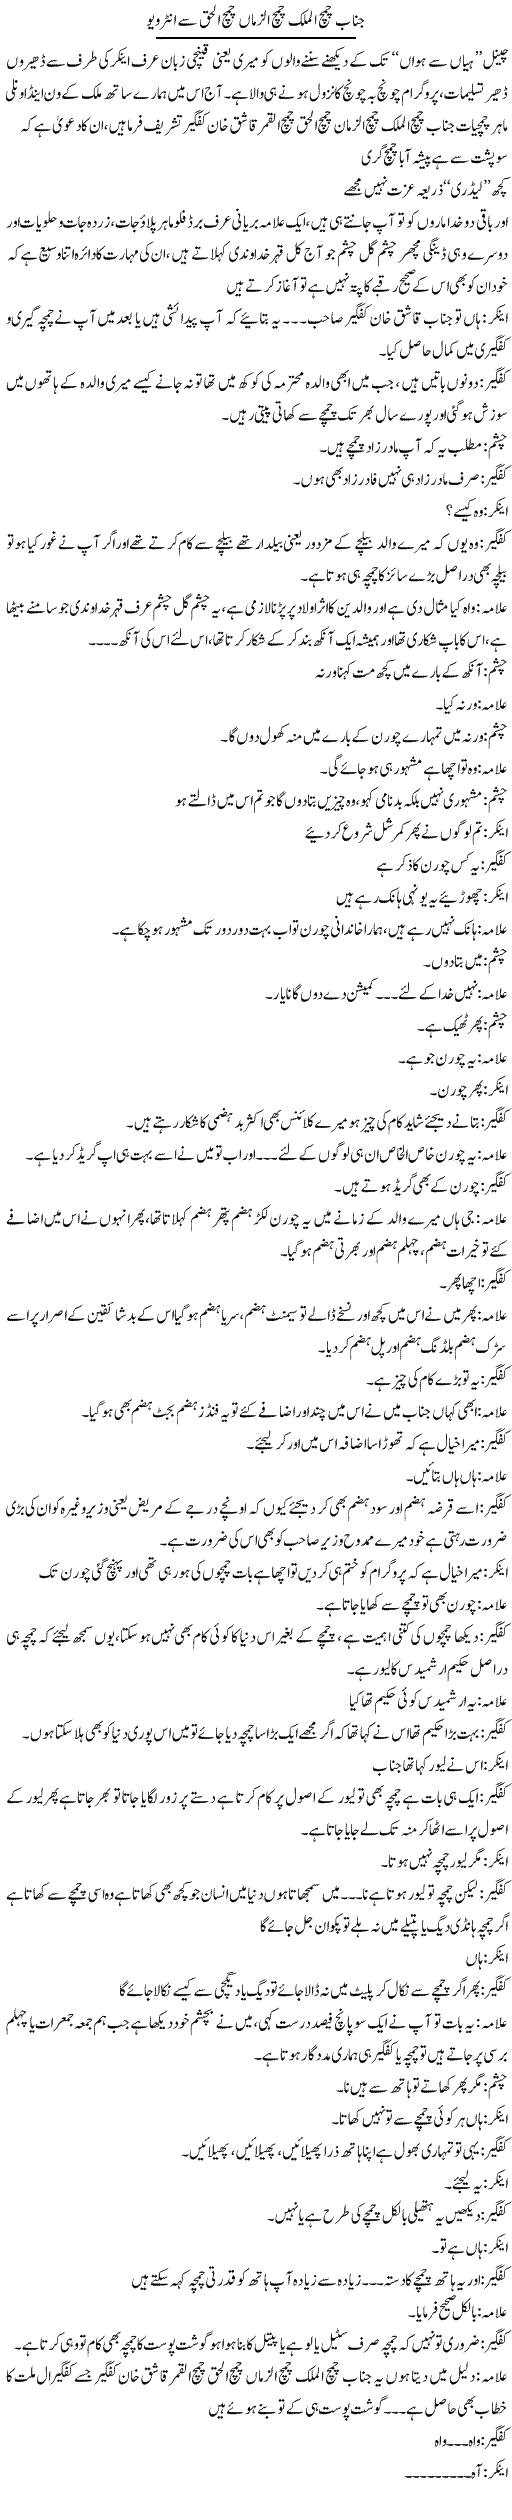 Janab Chamac Ul Mulk Camach Uzman Chamach Ulhaq Say Interview | Saad Ullah Jan Barq | Daily Urdu Columns